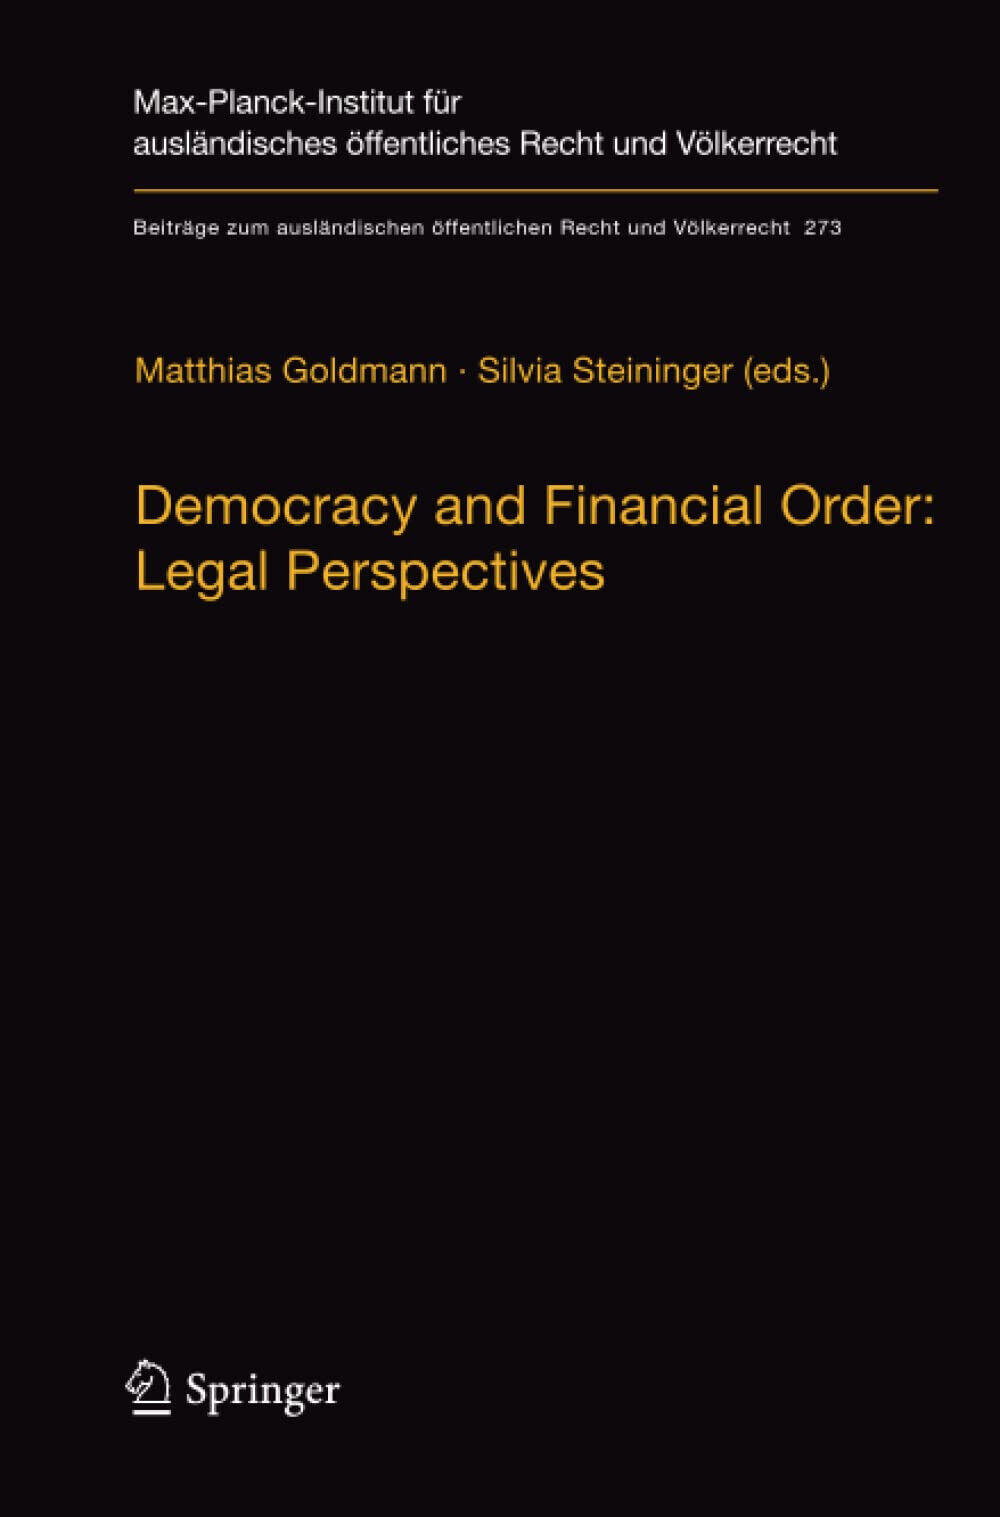 Democracy and Financial Order: Legal Perspectives - Springer, 2019 libro usato